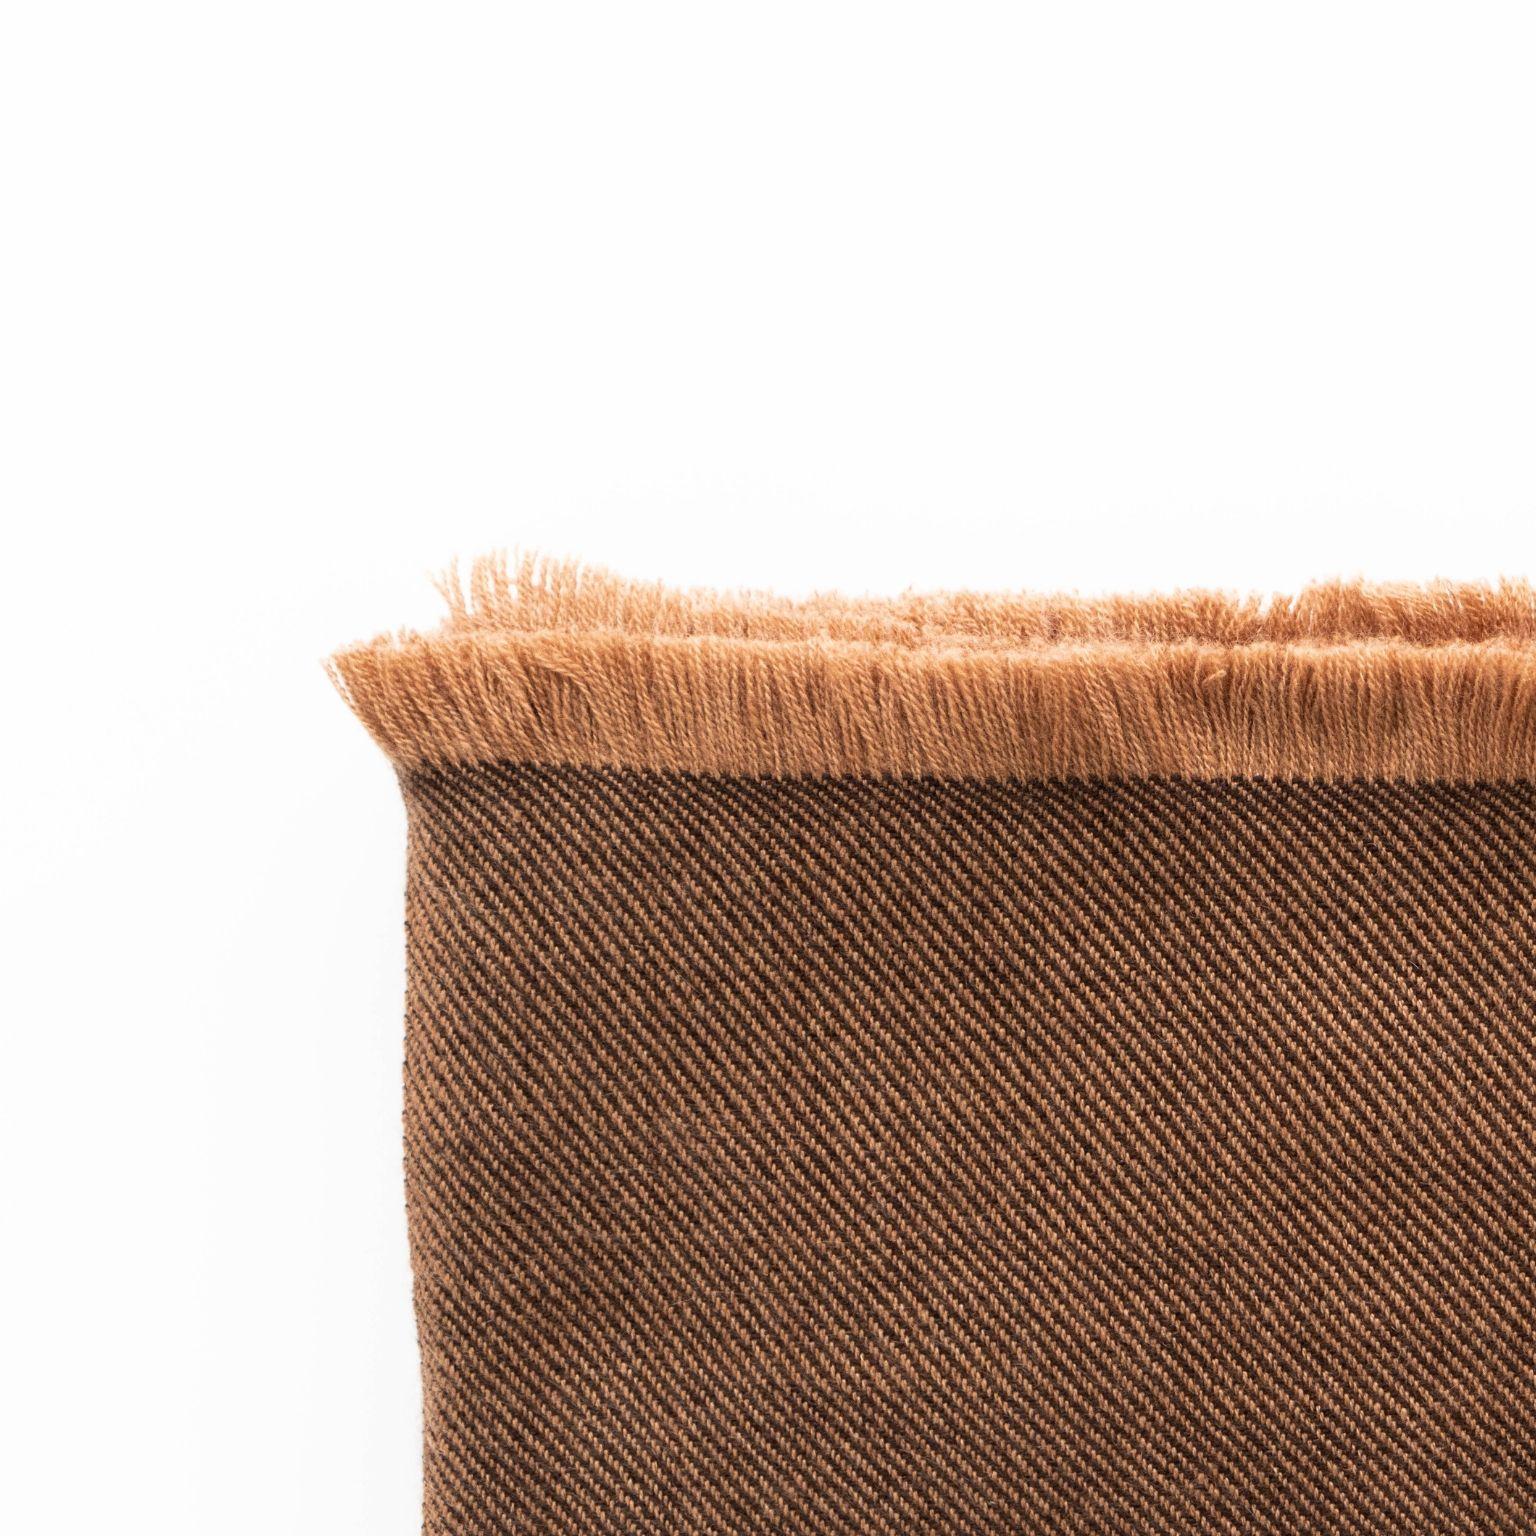 Hay Merino Handloom Soft Throw / Blanket In Warm Shades of Earthy Brown  For Sale 2